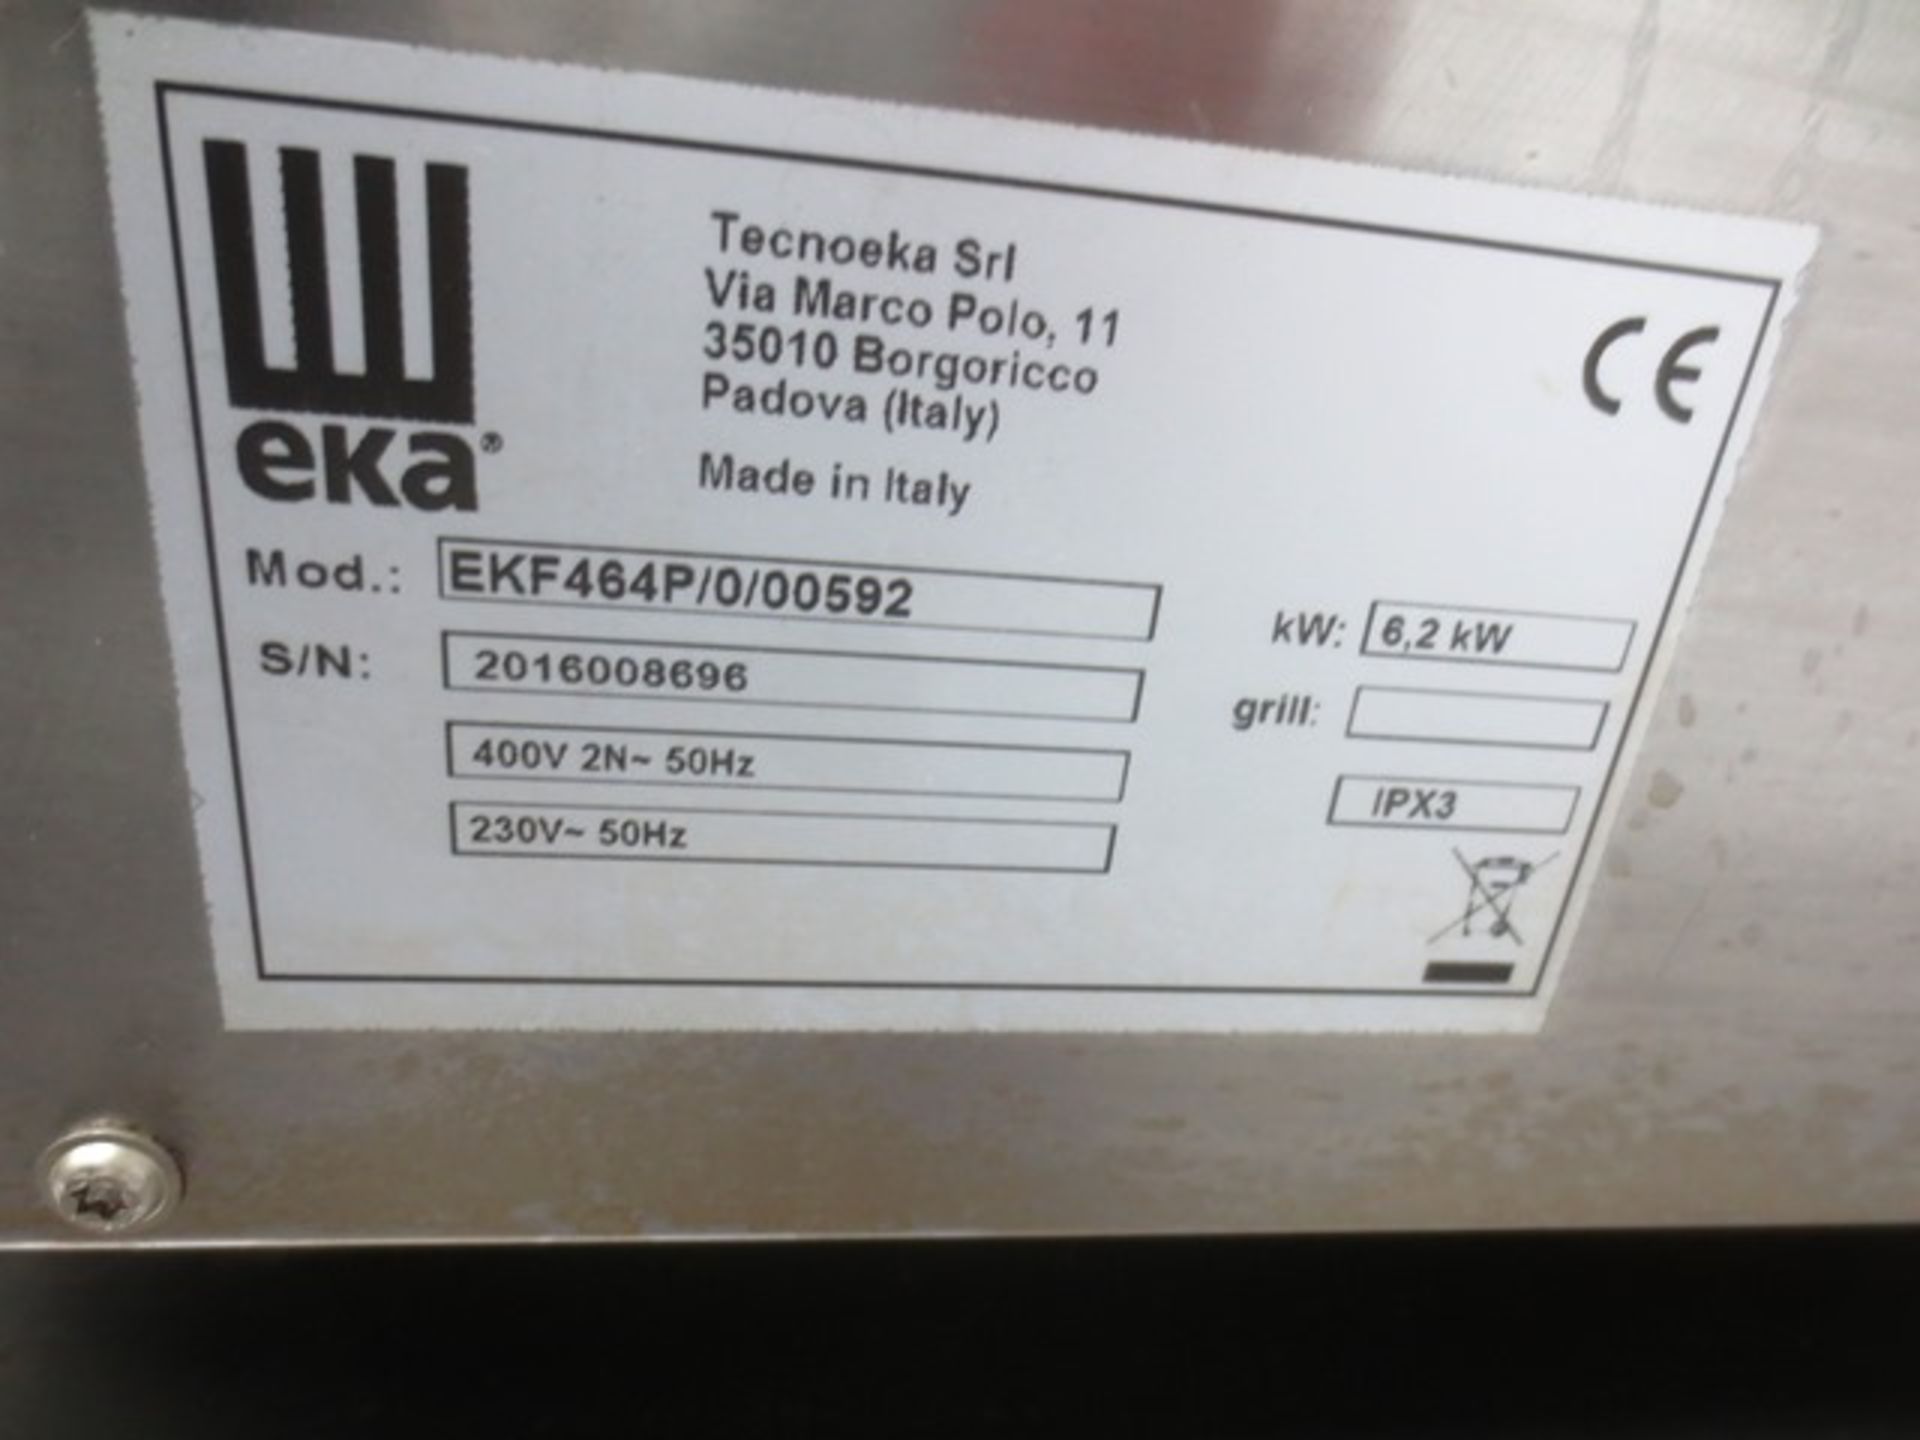 Eka stainless steel, glass fronted commercial oven, 3 phase, model EK F464 P/0/00592, serial no: - Bild 2 aus 2